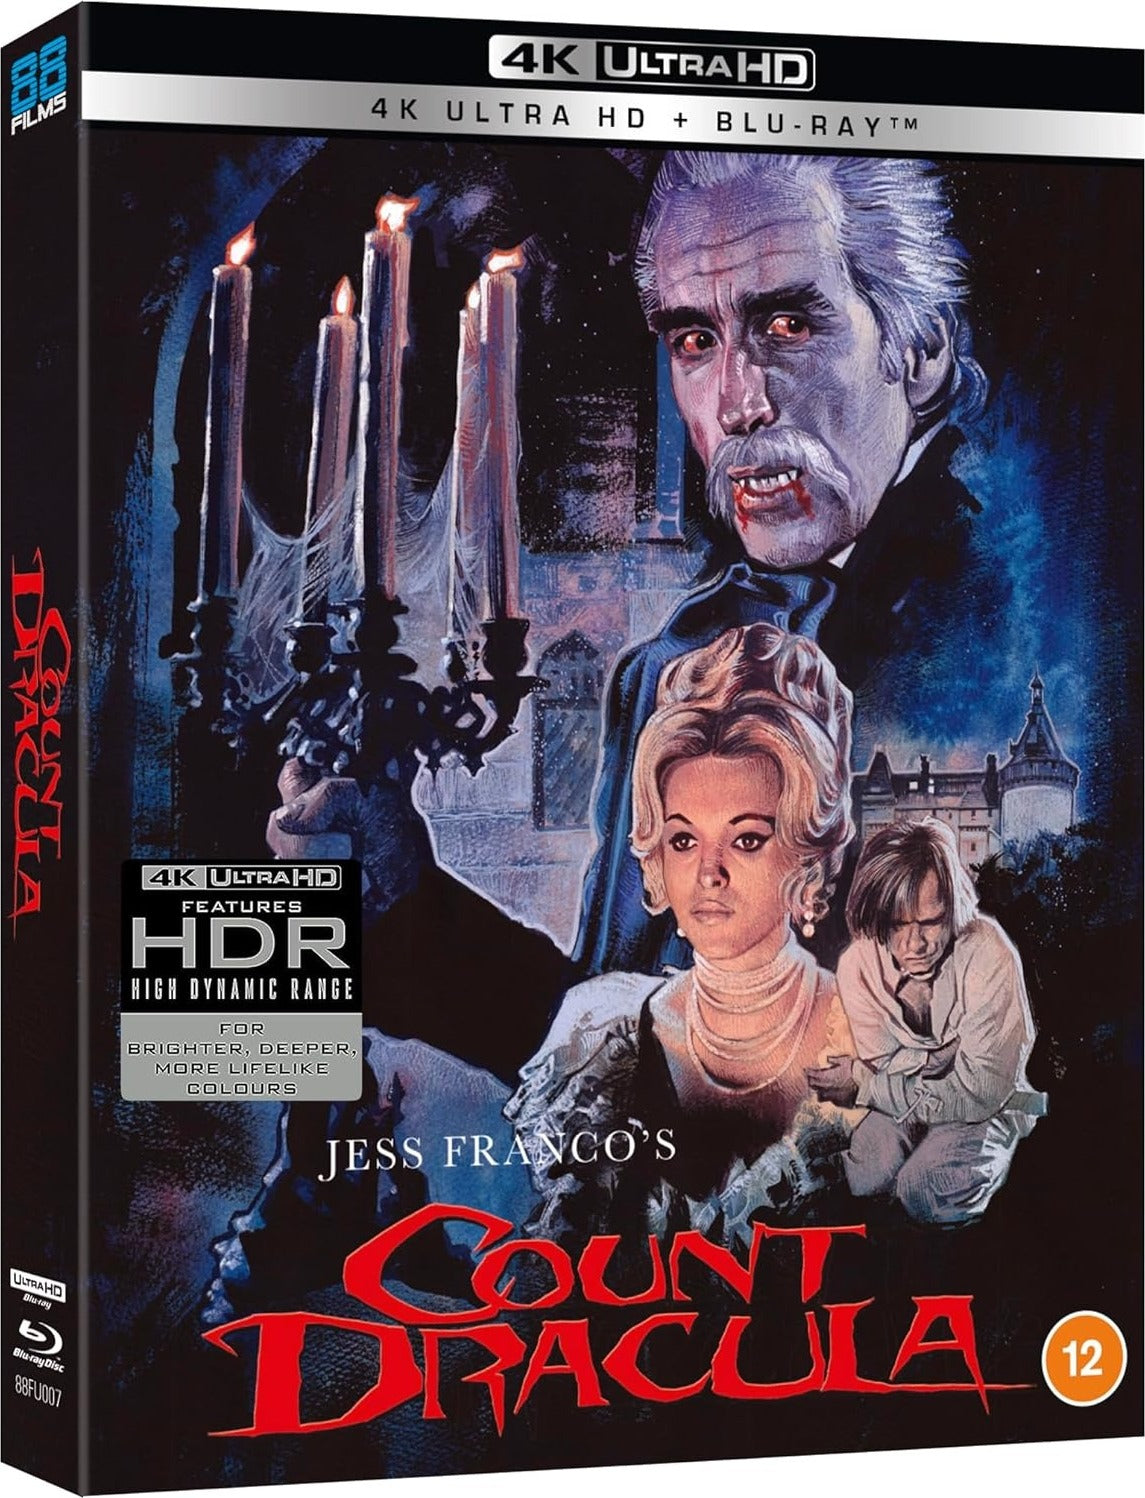 Count Dracula [4K UHD] [UK]